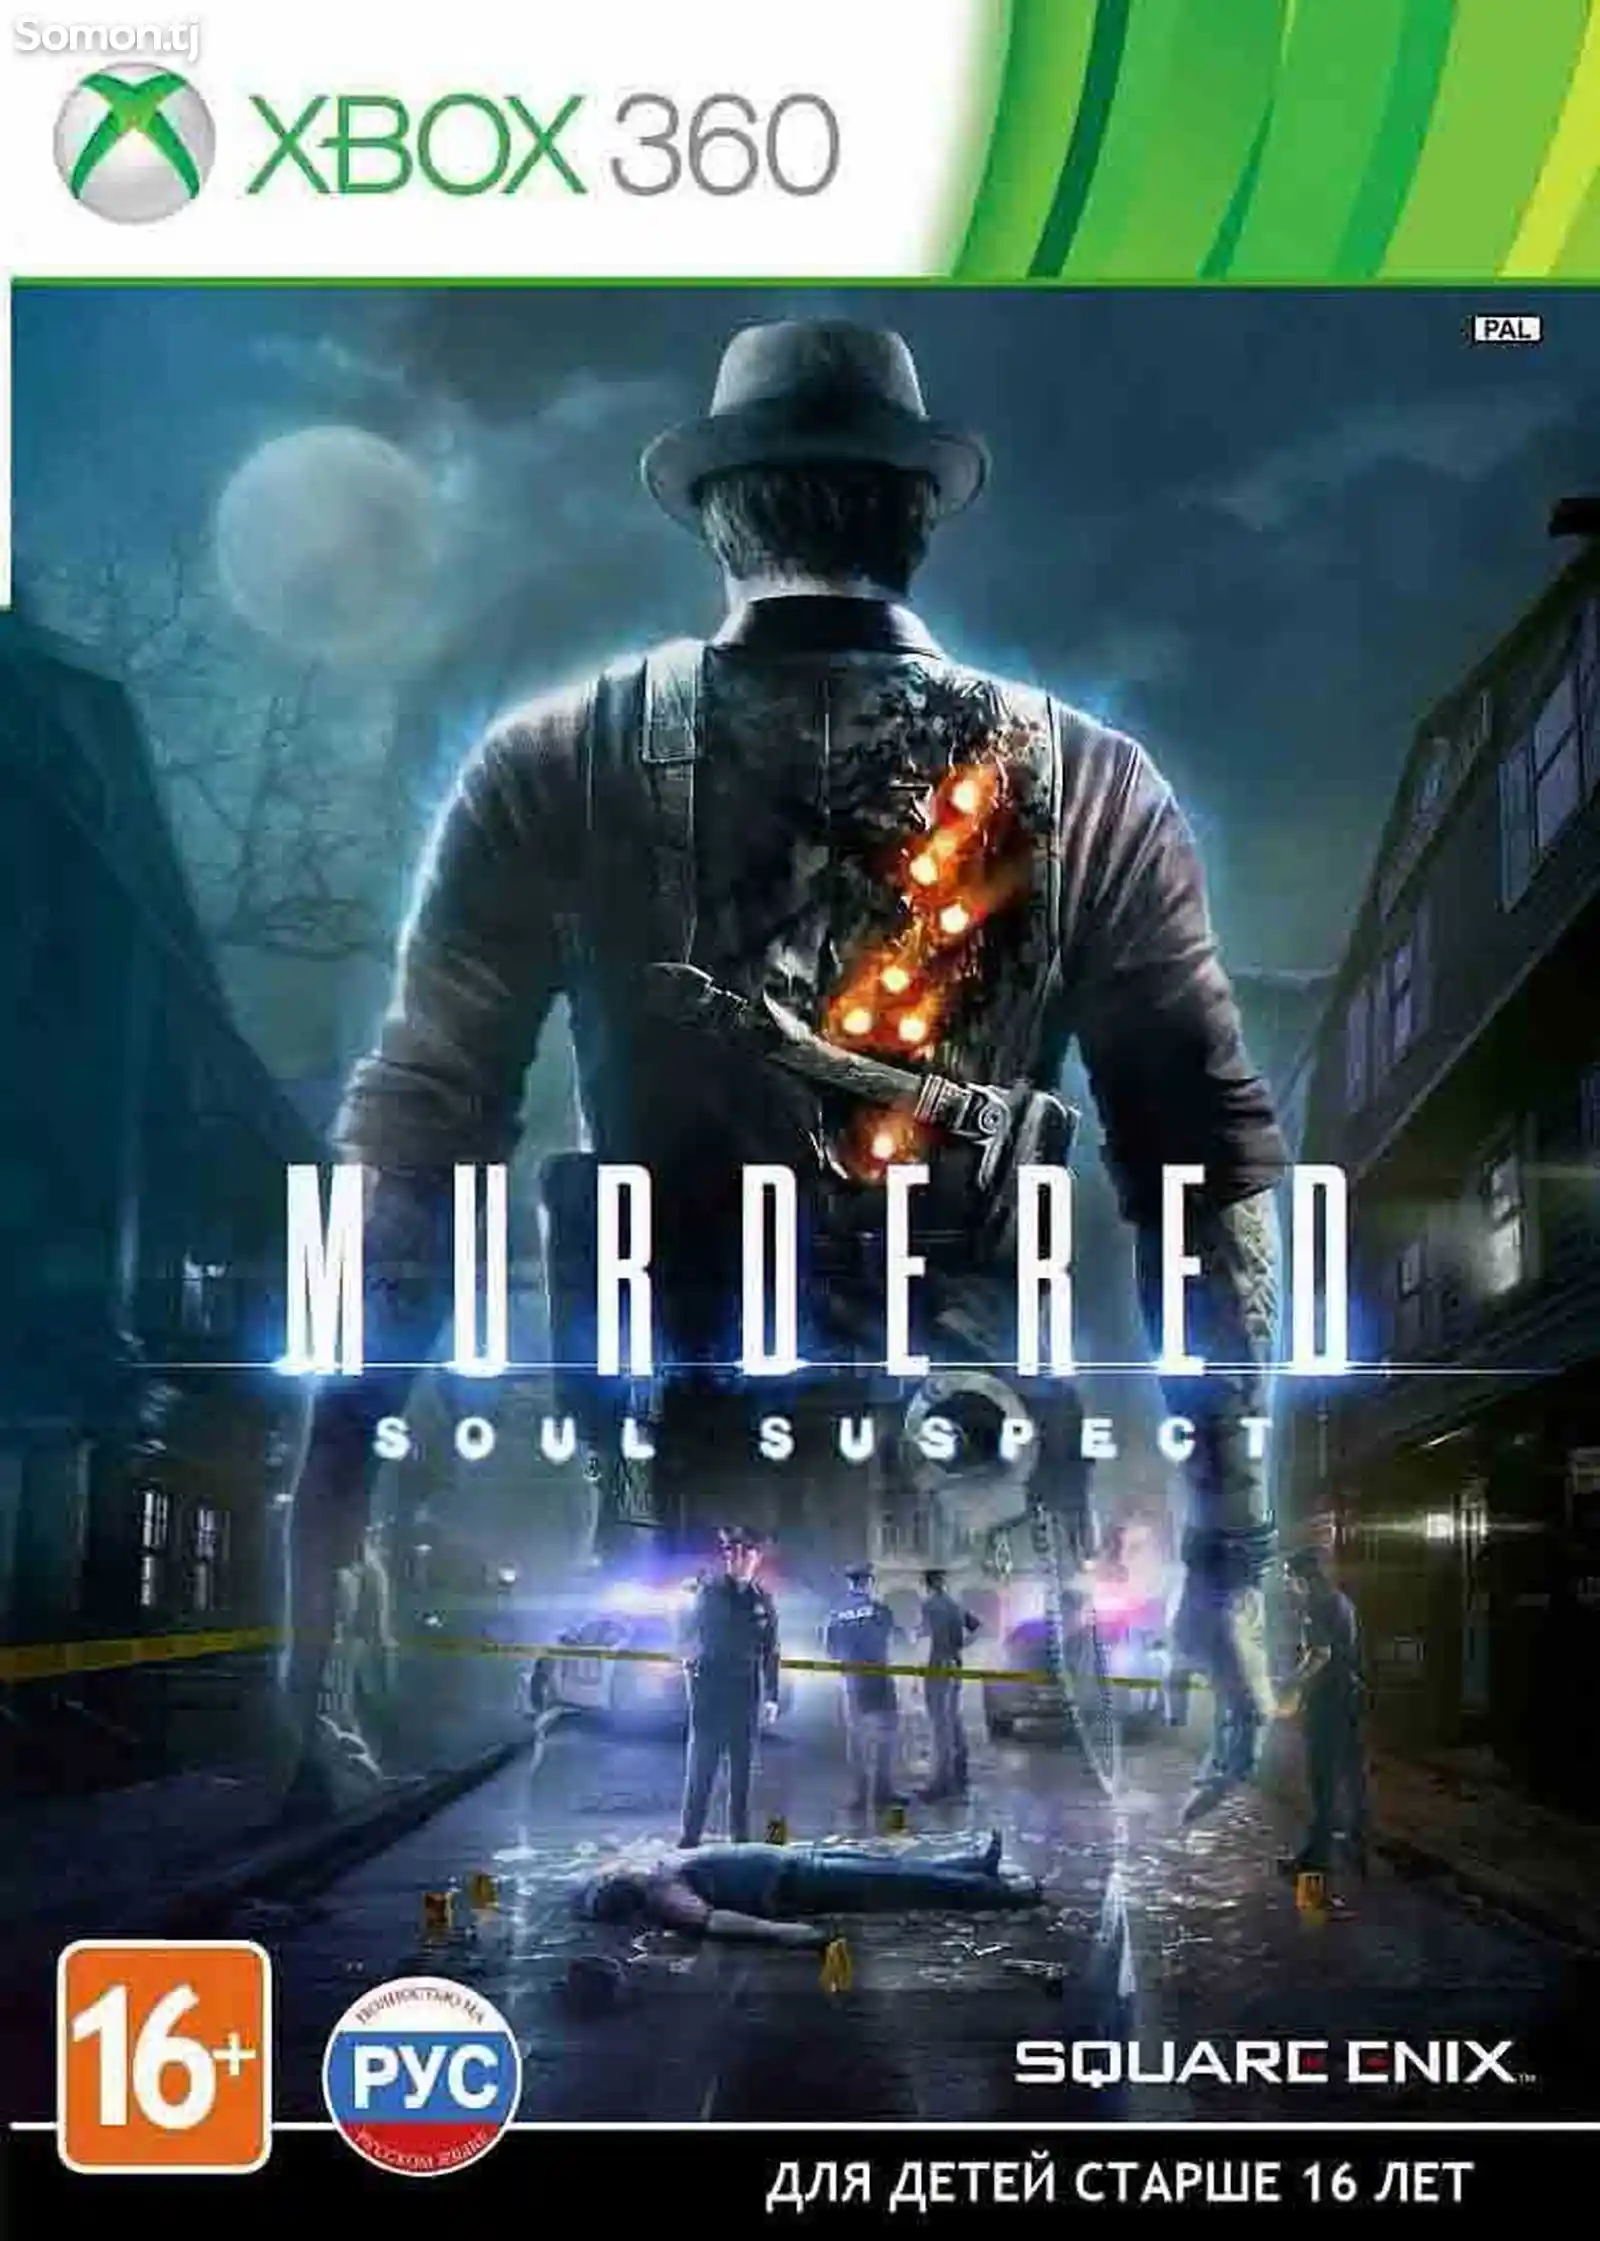 Игра Murdered soul suspect для прошитых Xbox 360